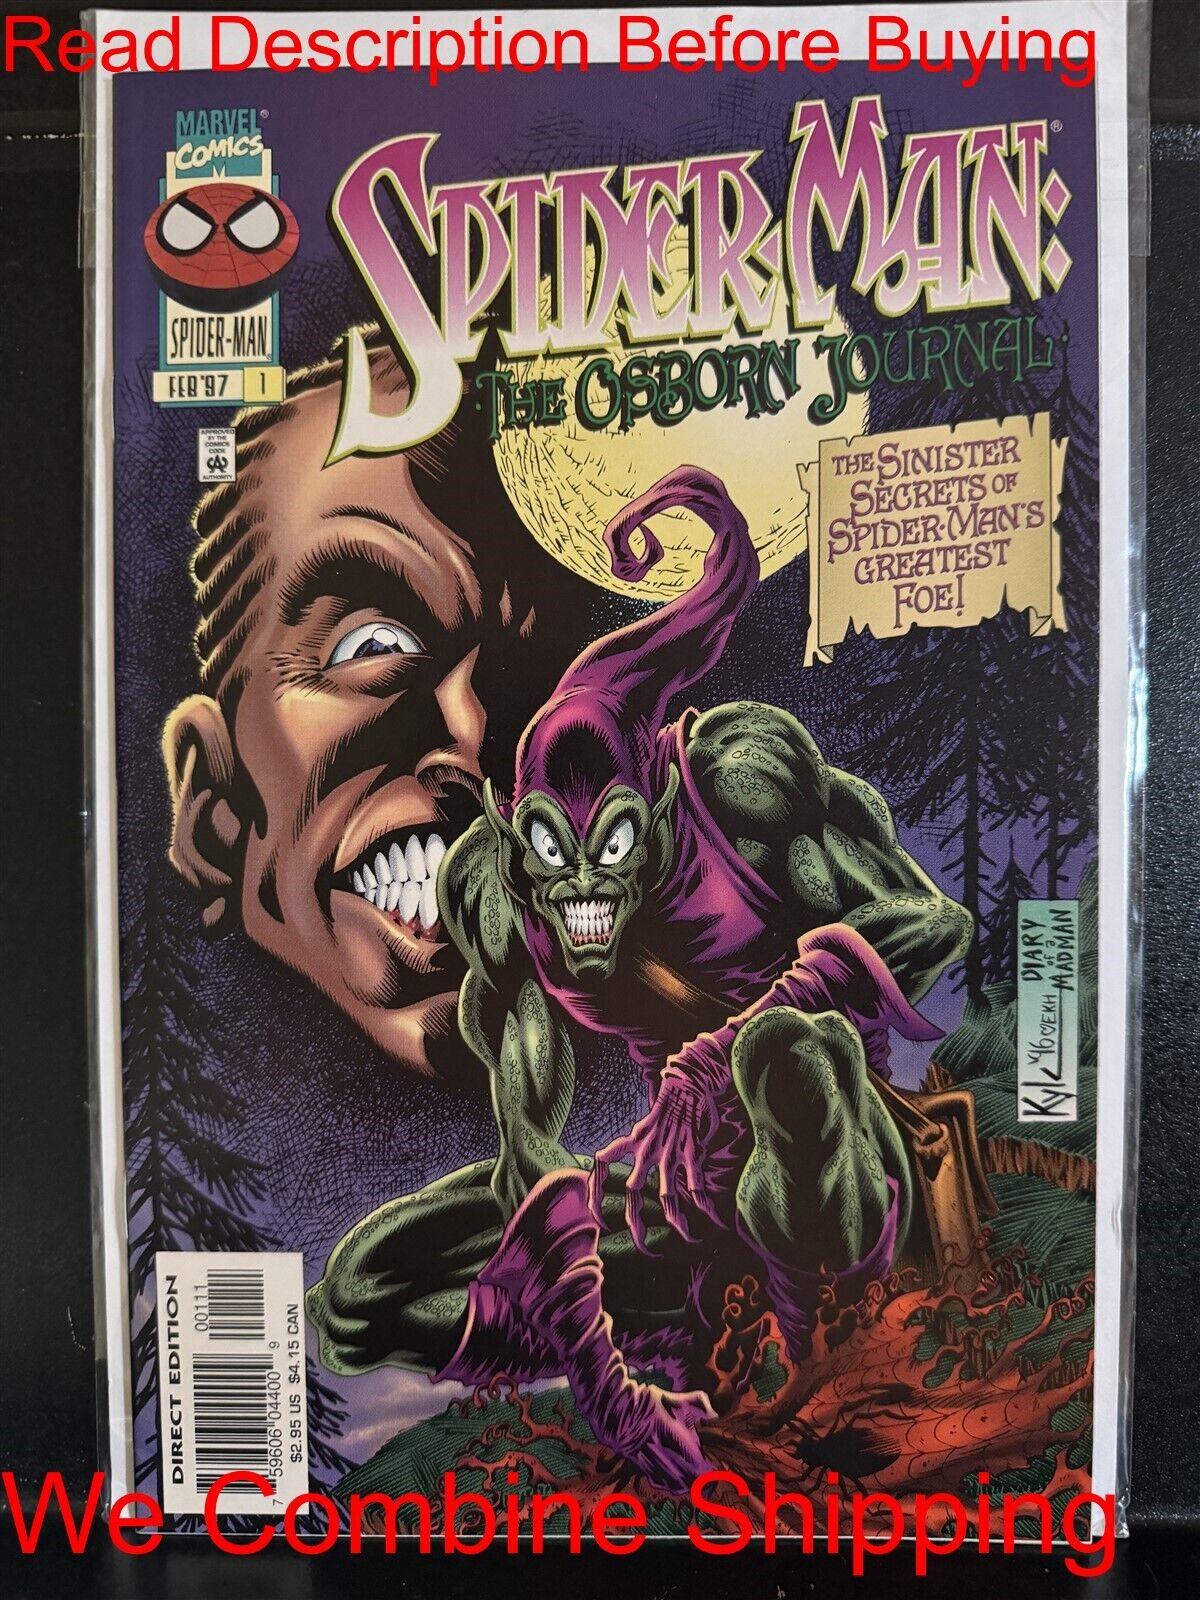 BARGAIN BOOKS ($5 MIN PURCHASE) Spider-Man Osborn Journal #1 (1997 Marvel)